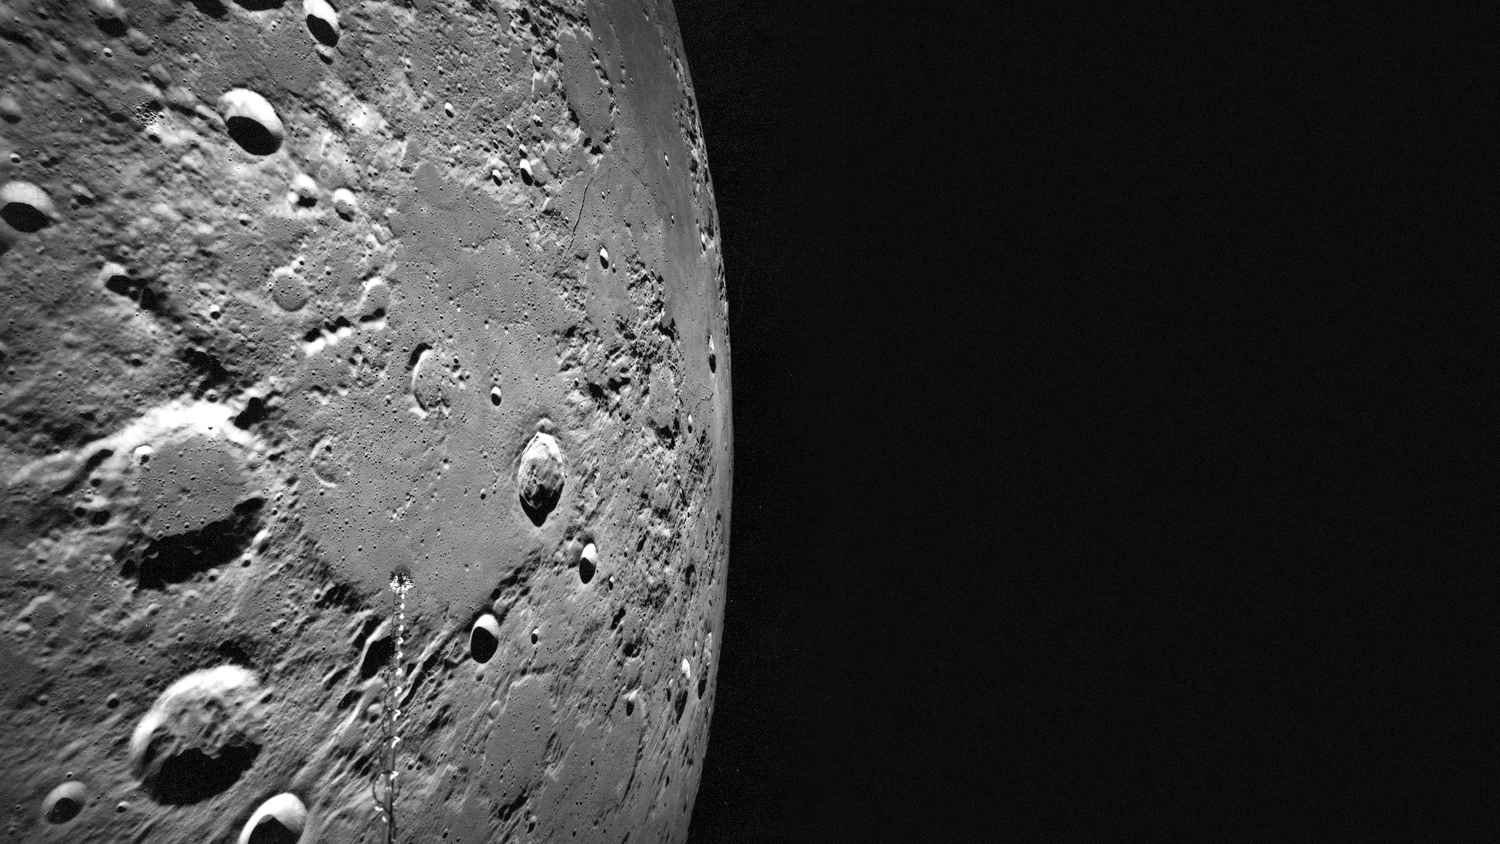 Moonshot - The Flight of Apollo 11